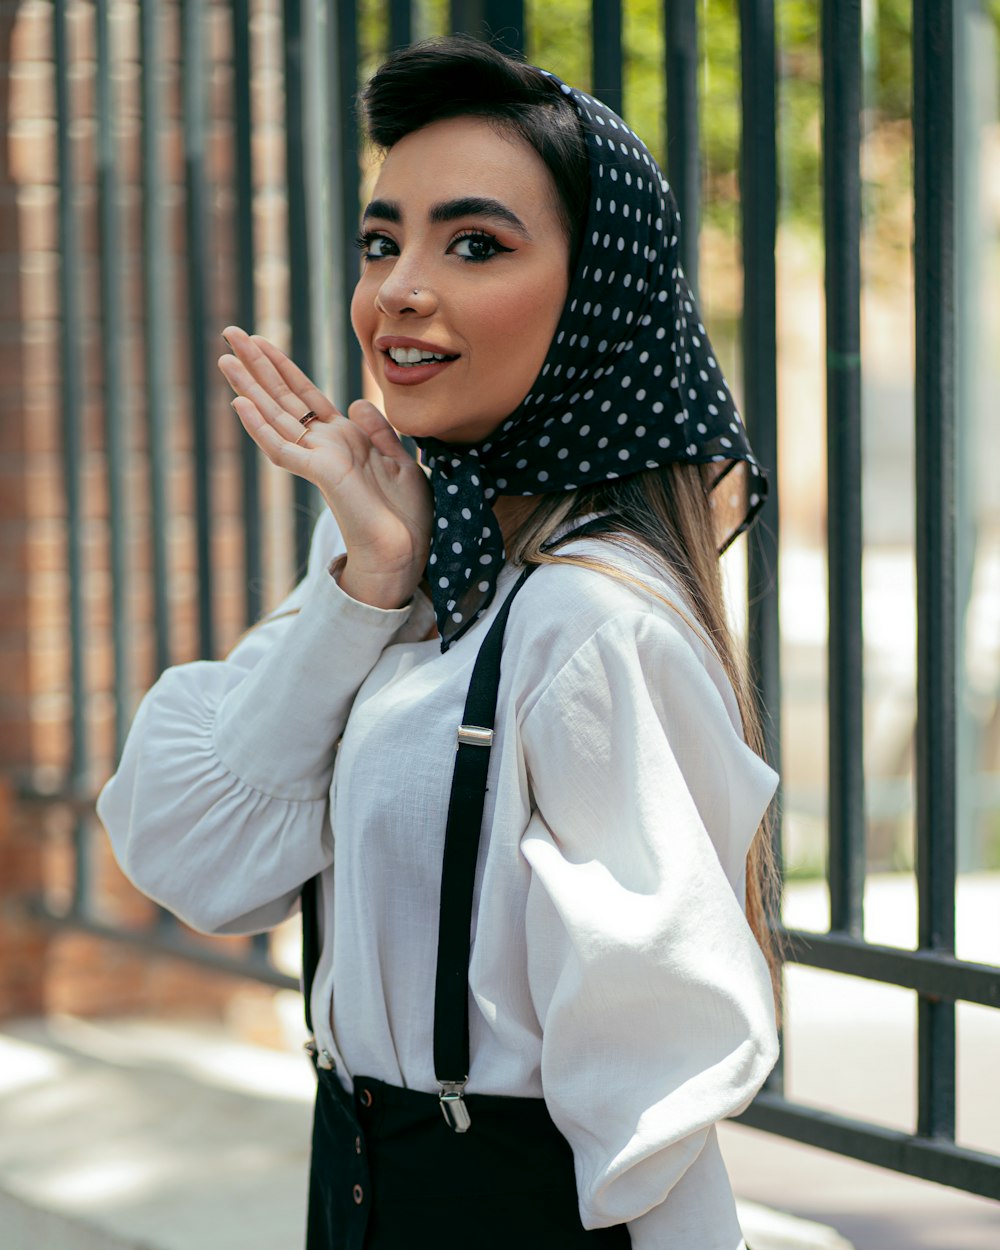 donna in camicia bianca a maniche lunghe e hijab a pois bianco e nero